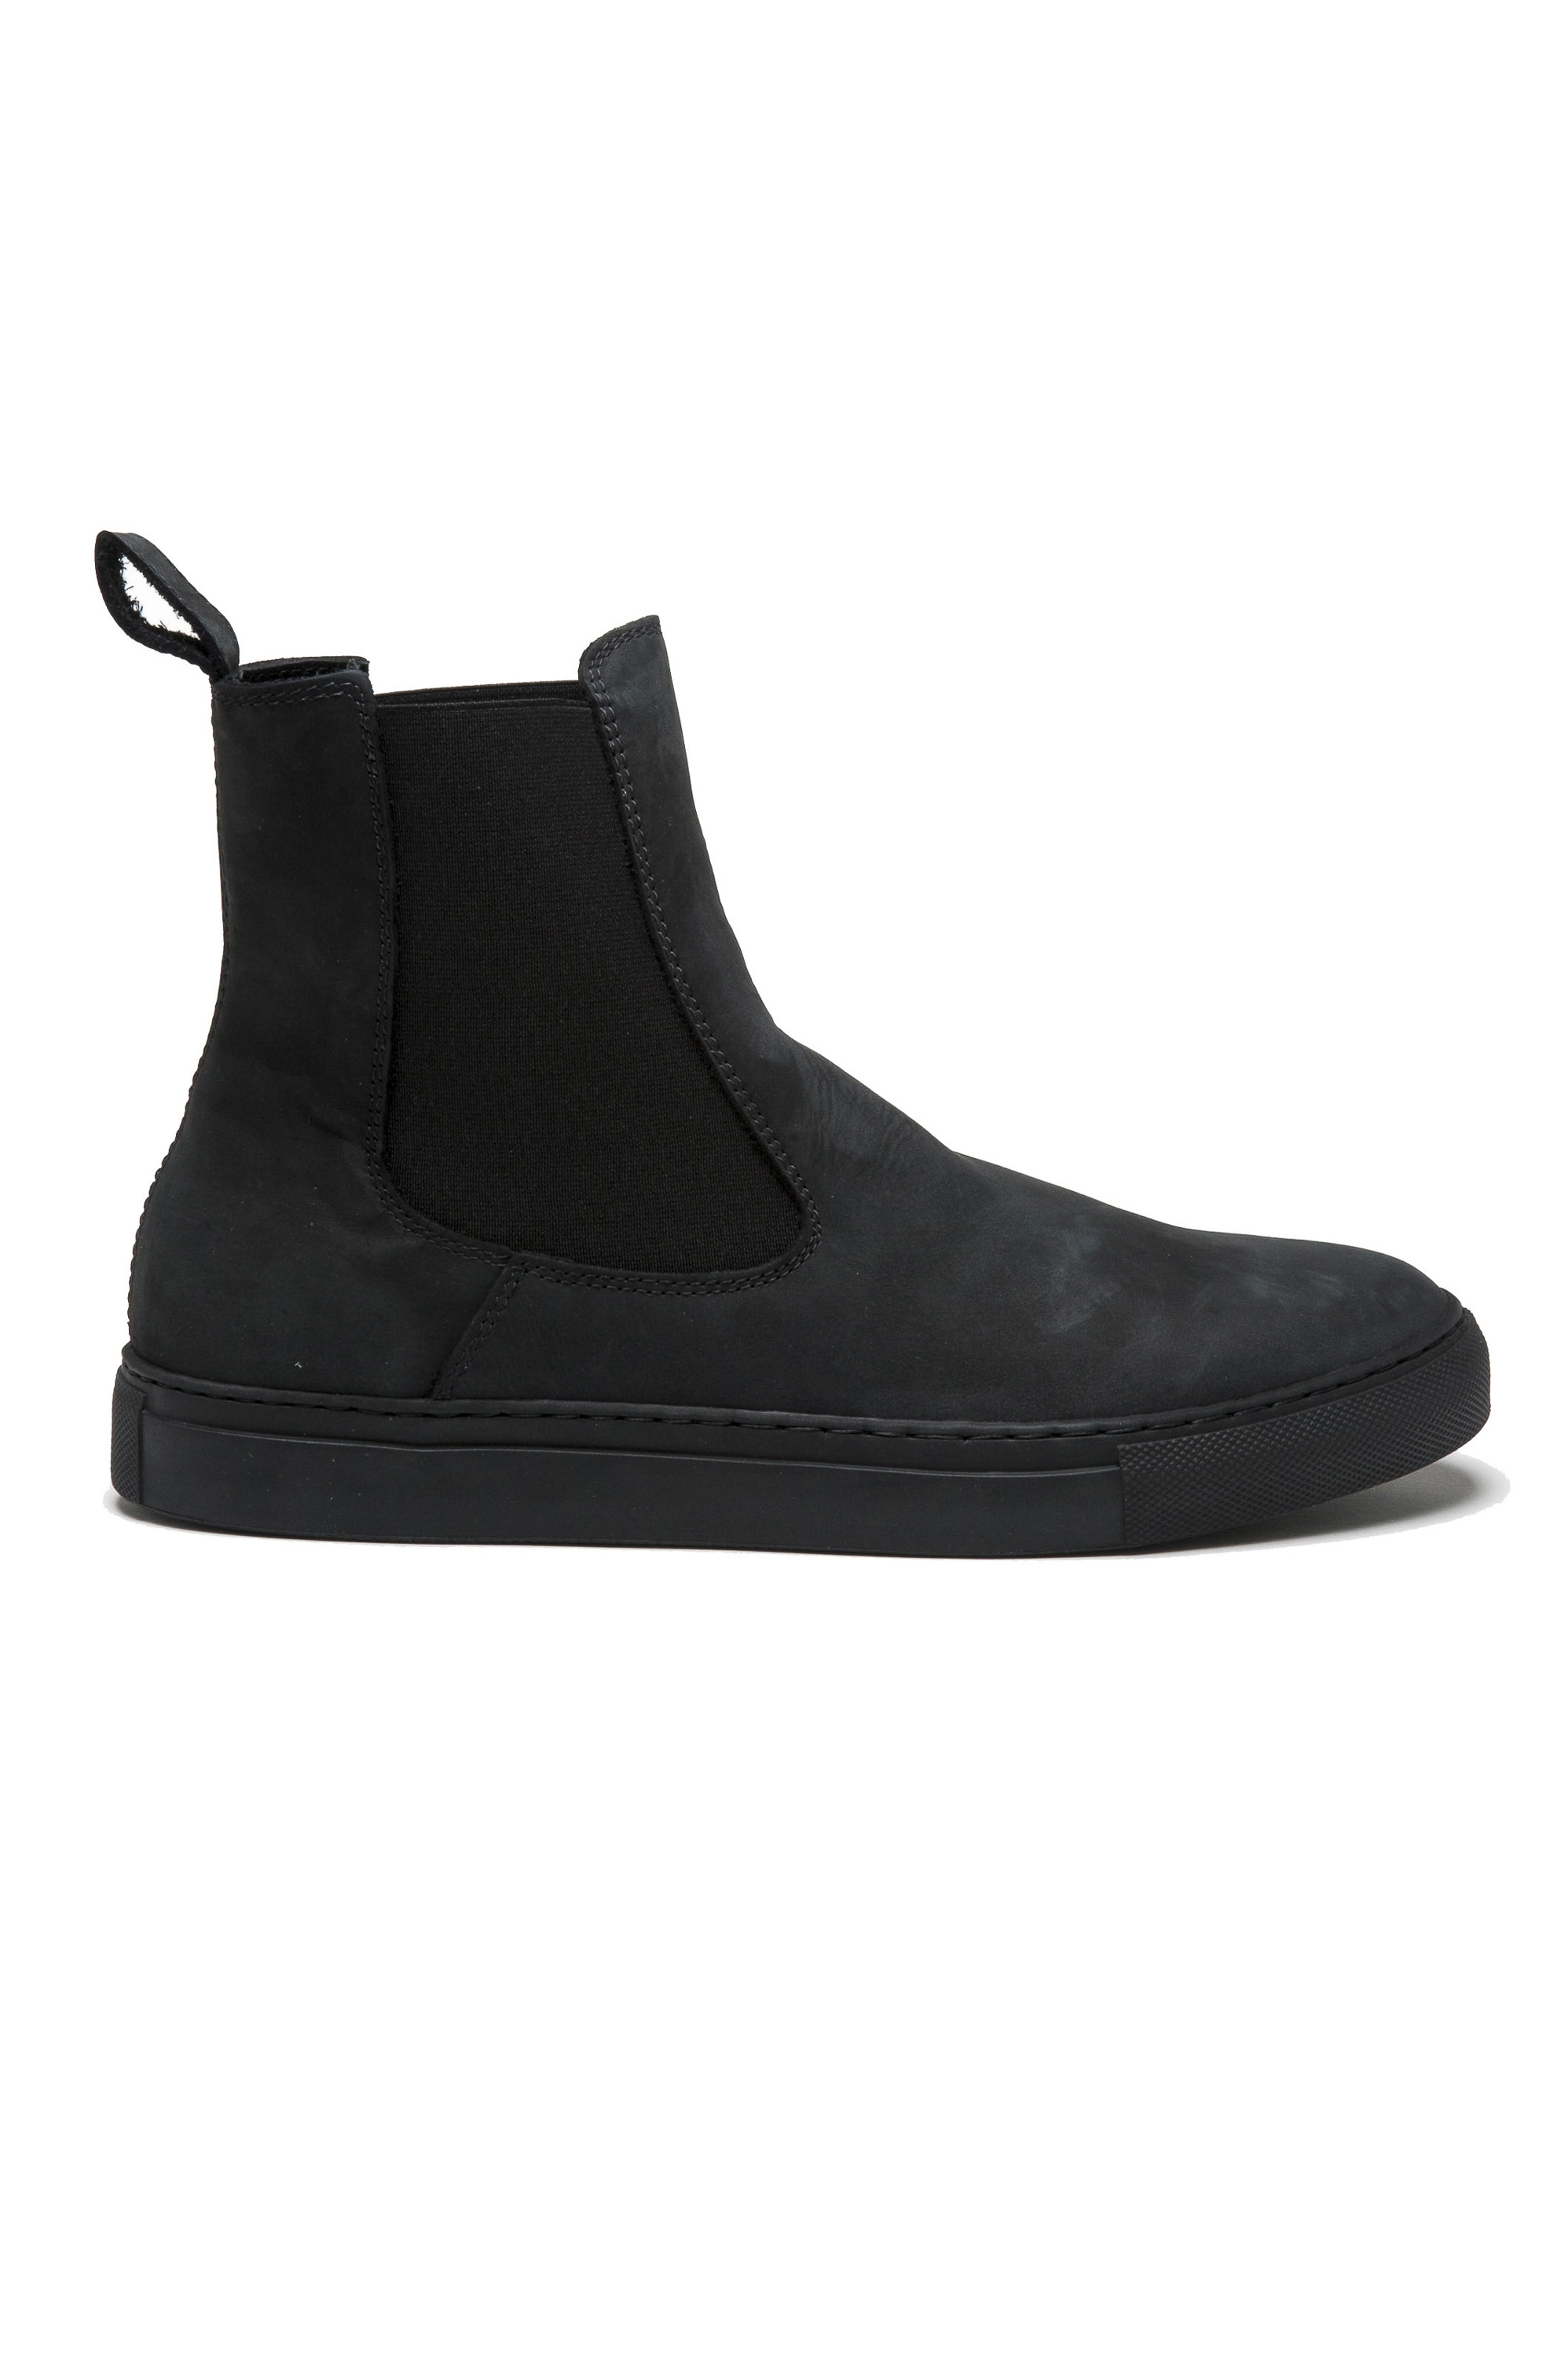 SBU 03542_2021AW Classic elastic sided boots in grey nubuck calfskin leather 01